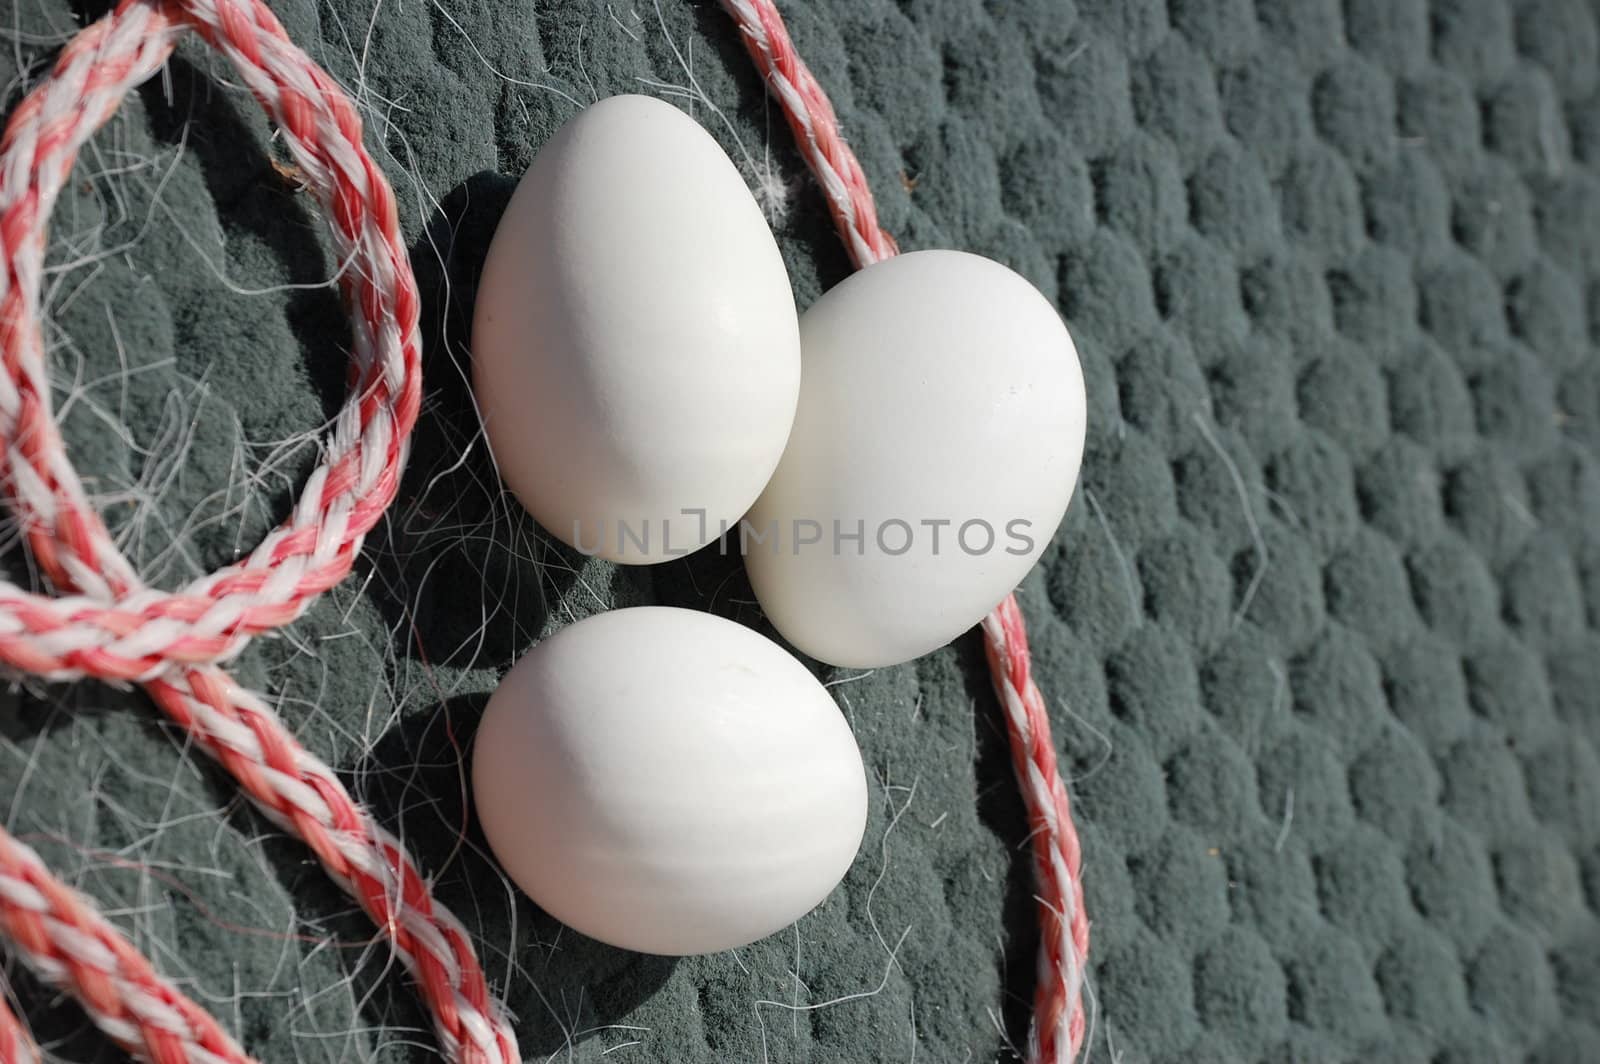 Three eggs on a boat